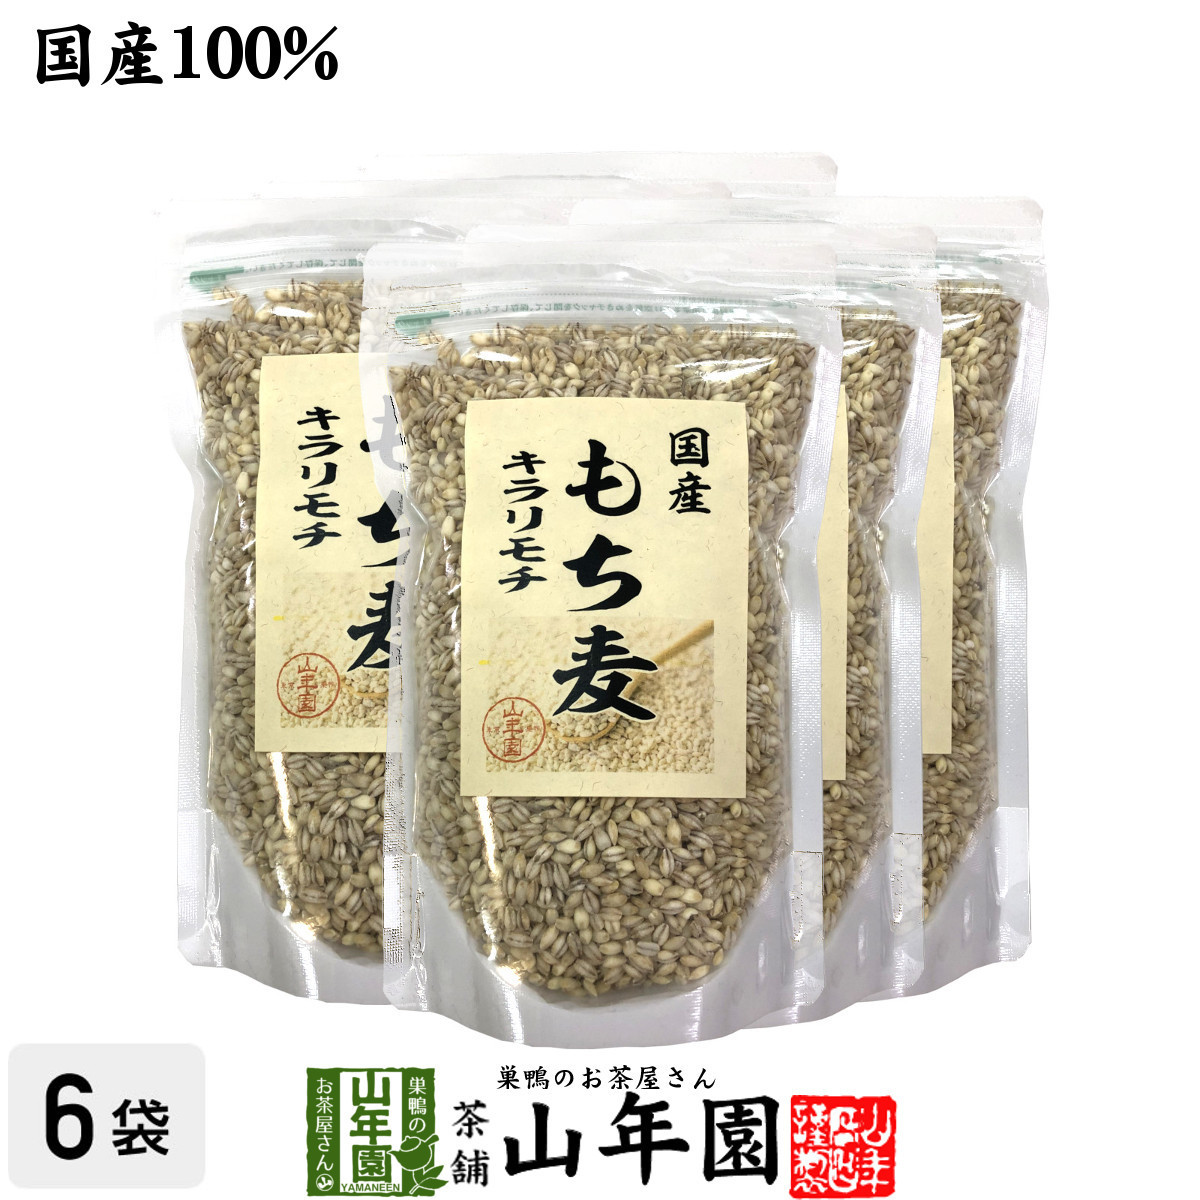  domestic production mochi mugi kila Limo chi500g×6 sack set free shipping 